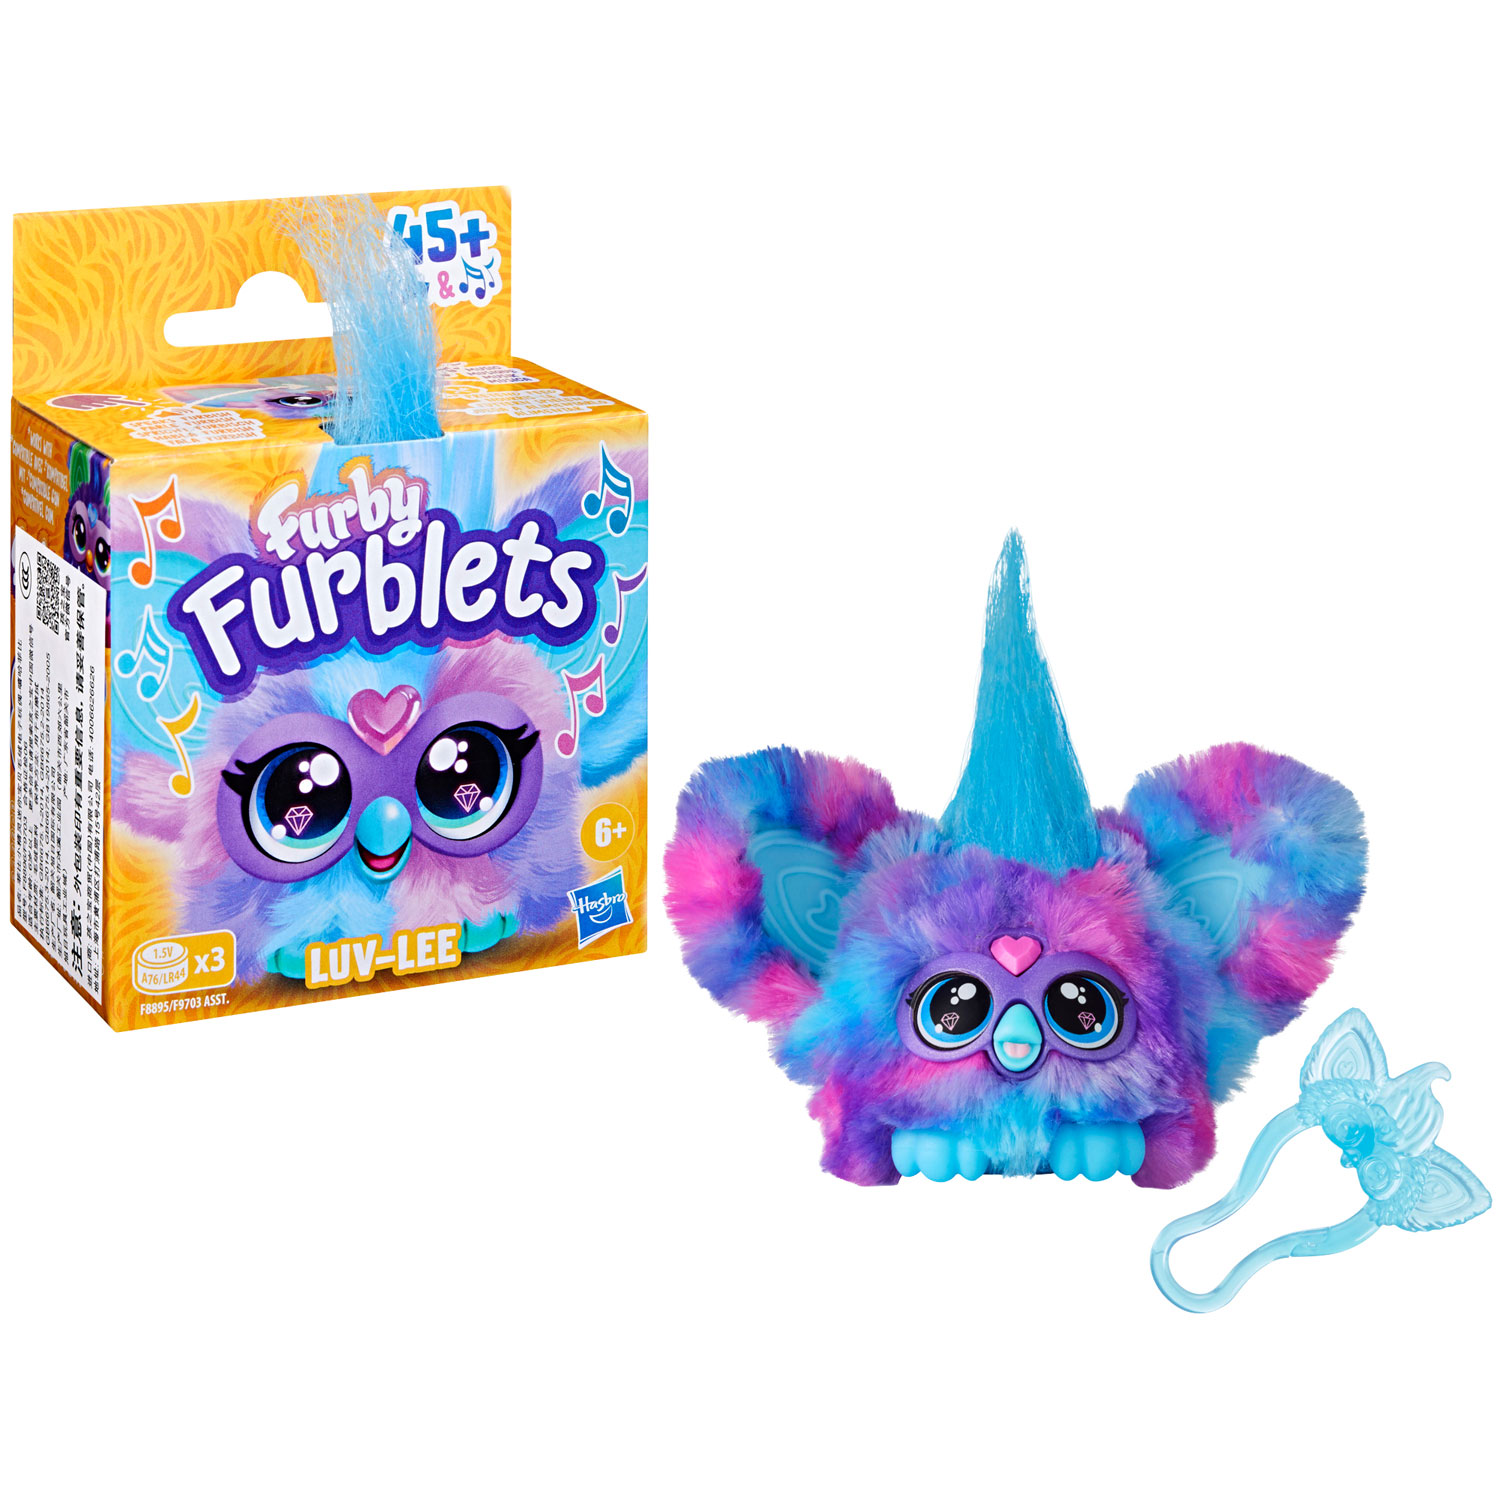 Hasbro Furby Furblets Luv-Lee Electronic Plush Toy